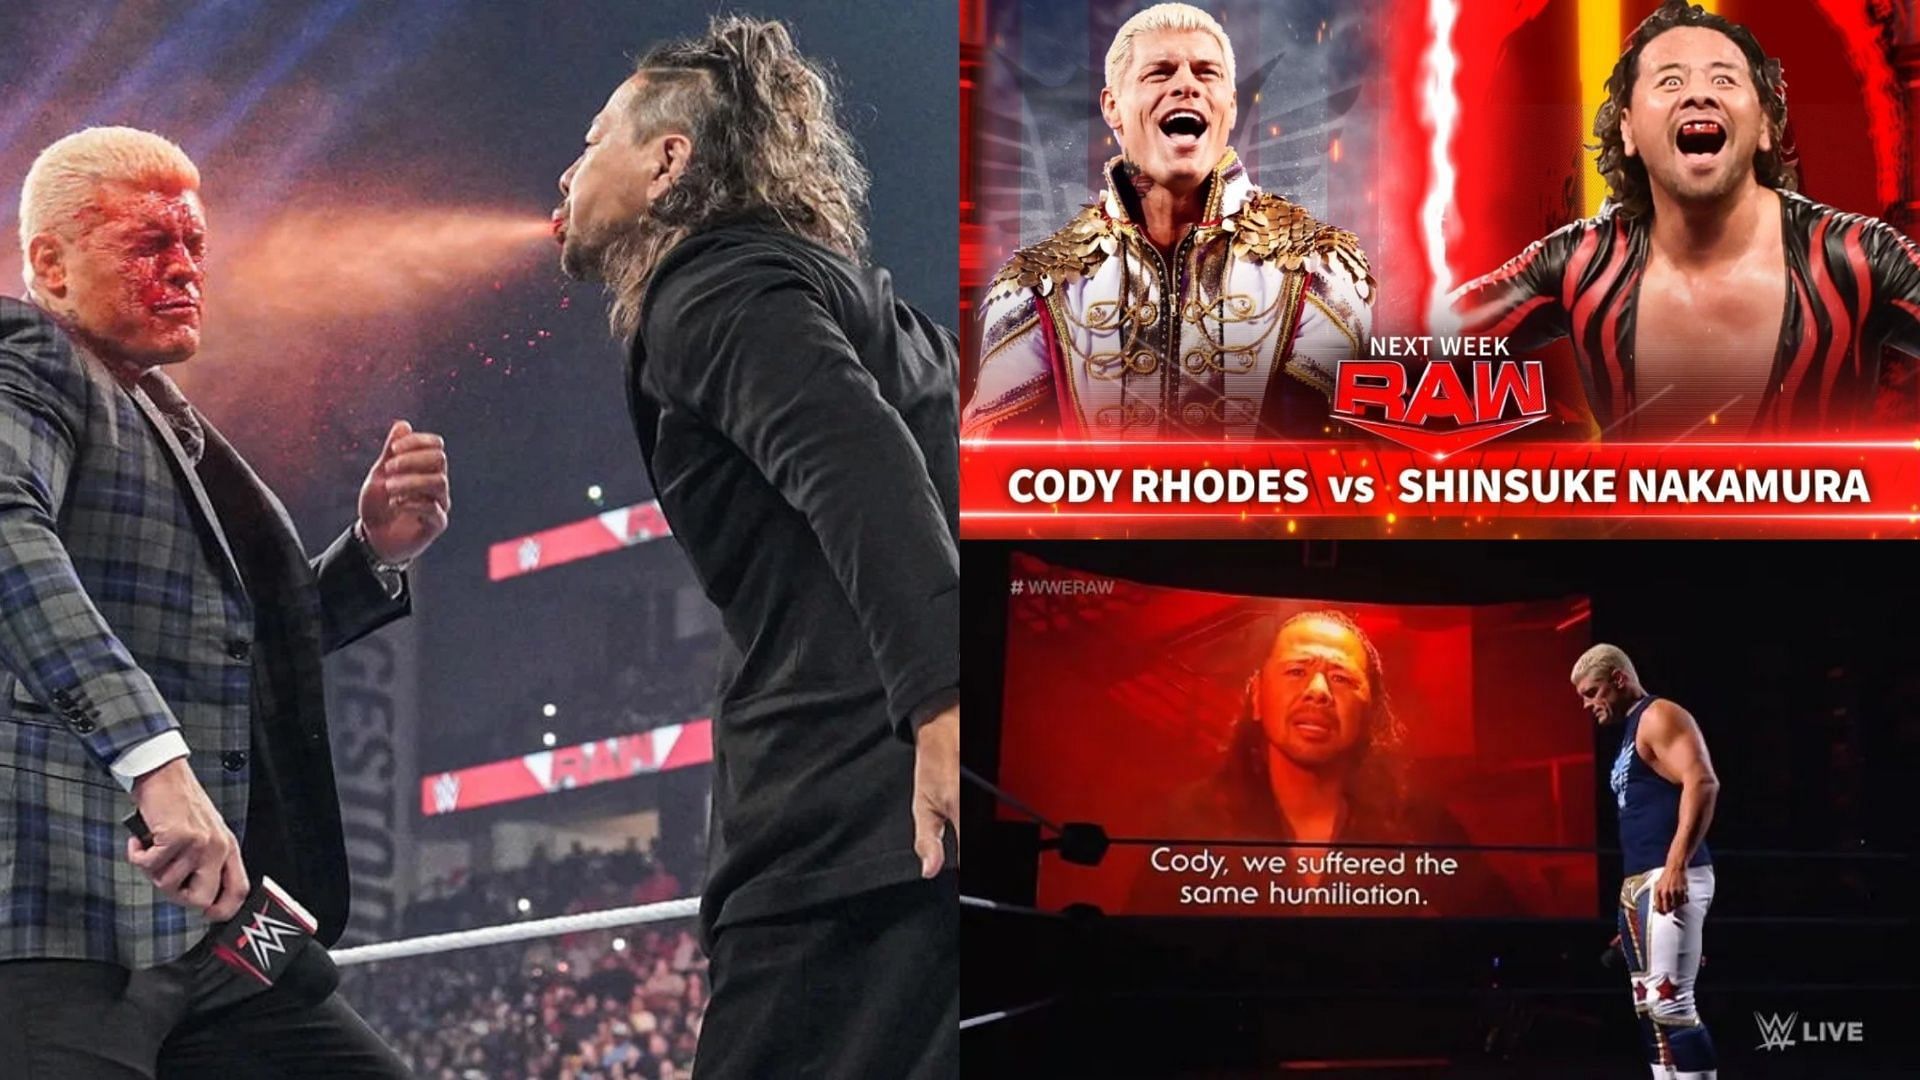 What will happen when Cody Rhodes battles Shinsuke Nakamura on WWE RAW?